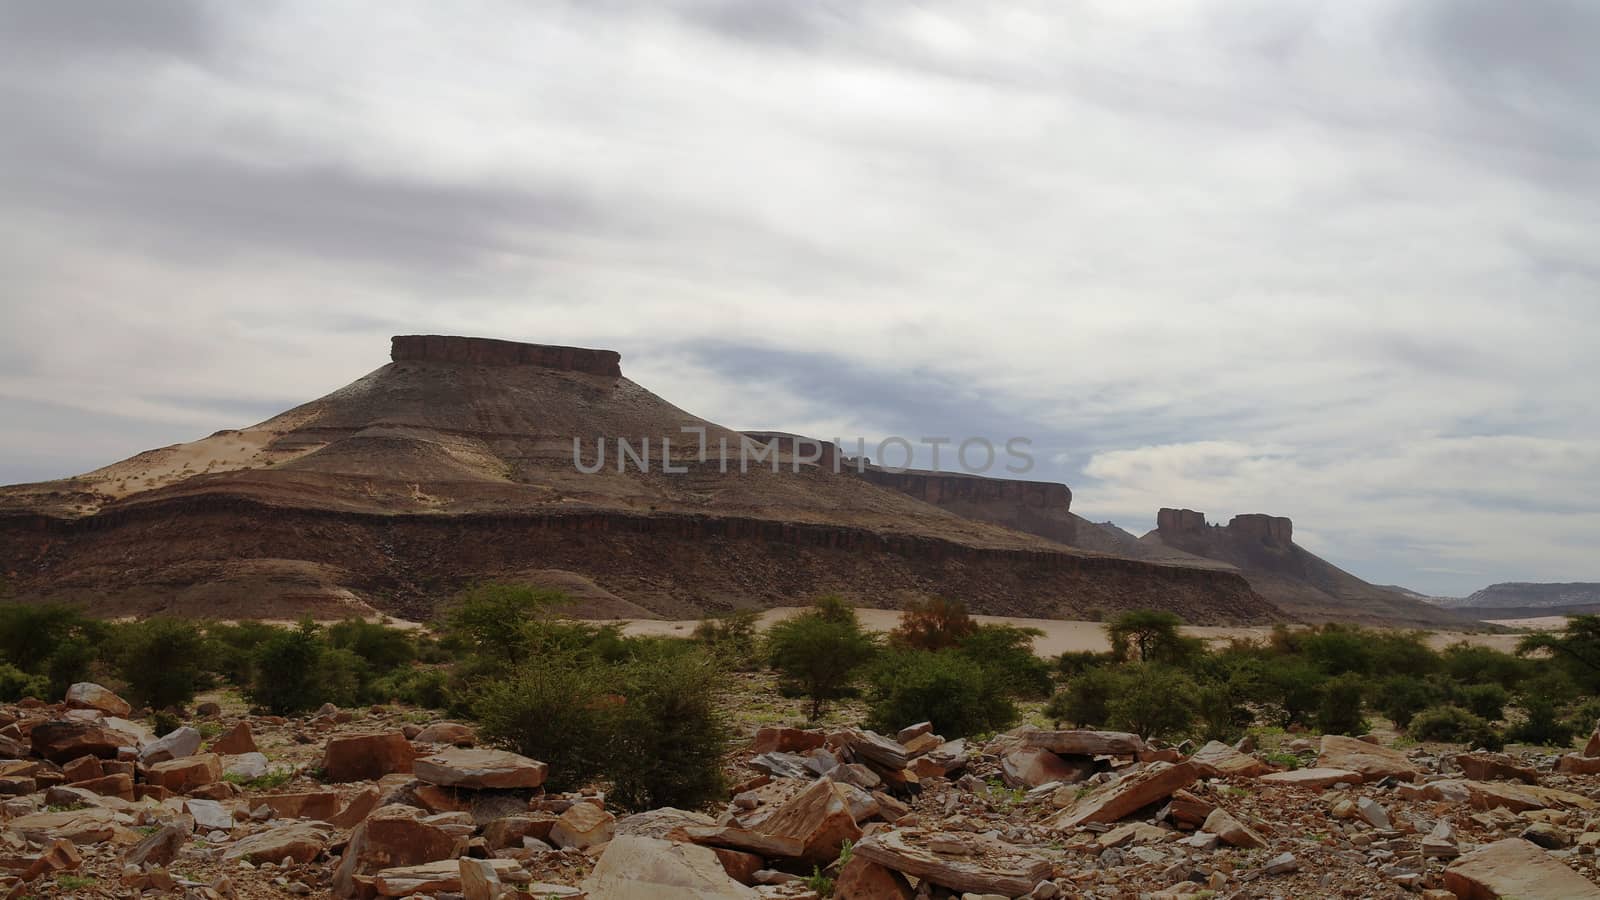 Adrar mountain, Mauritania by homocosmicos